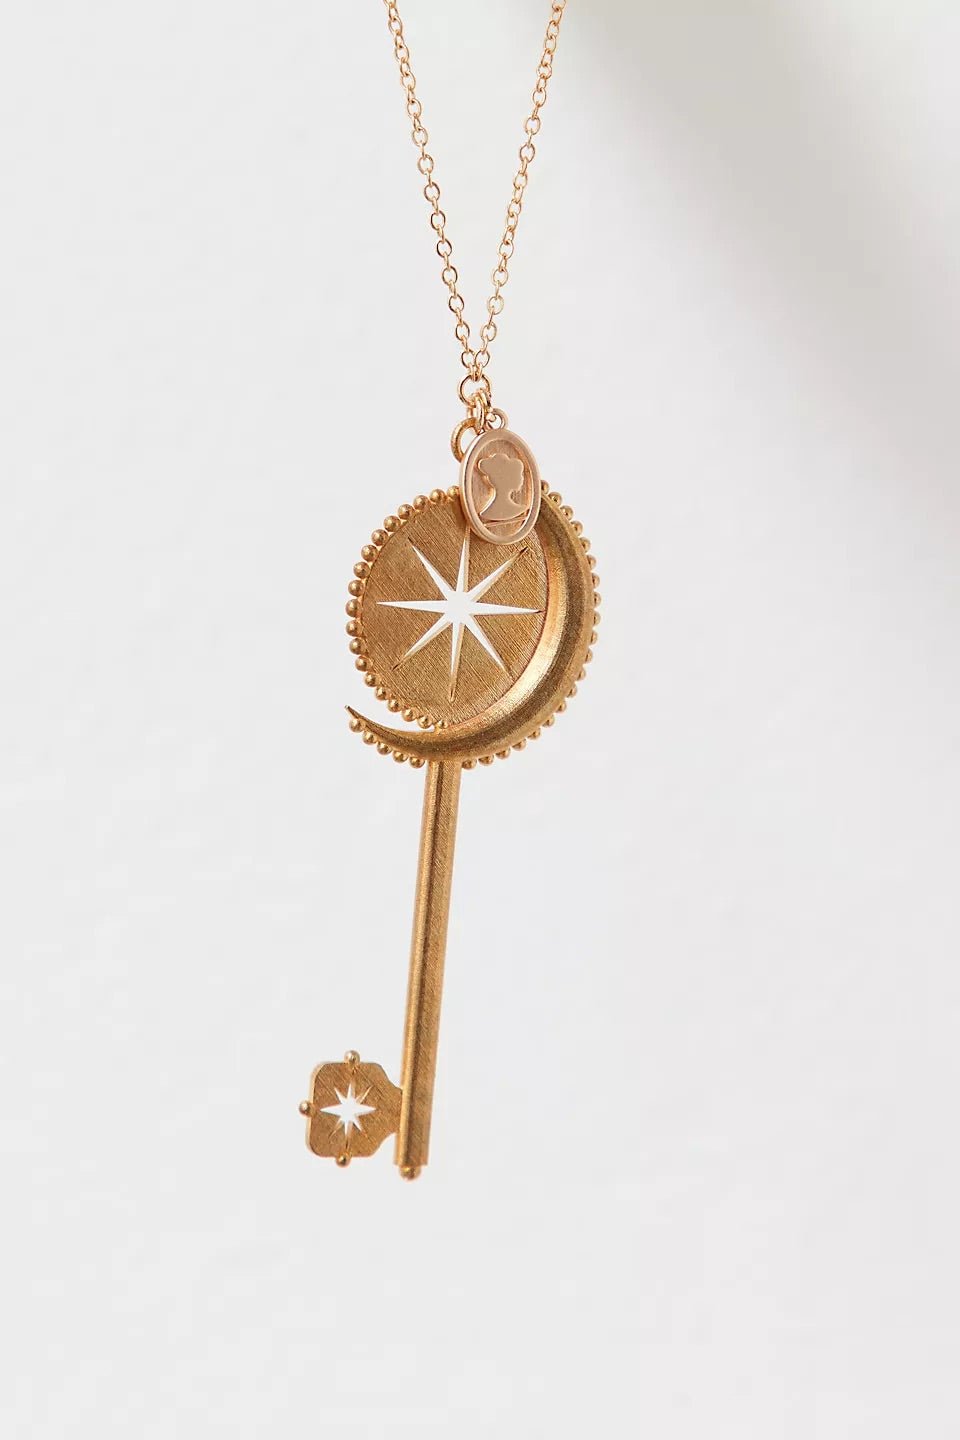 North Star Moon Key Ornament - Ariana Ost